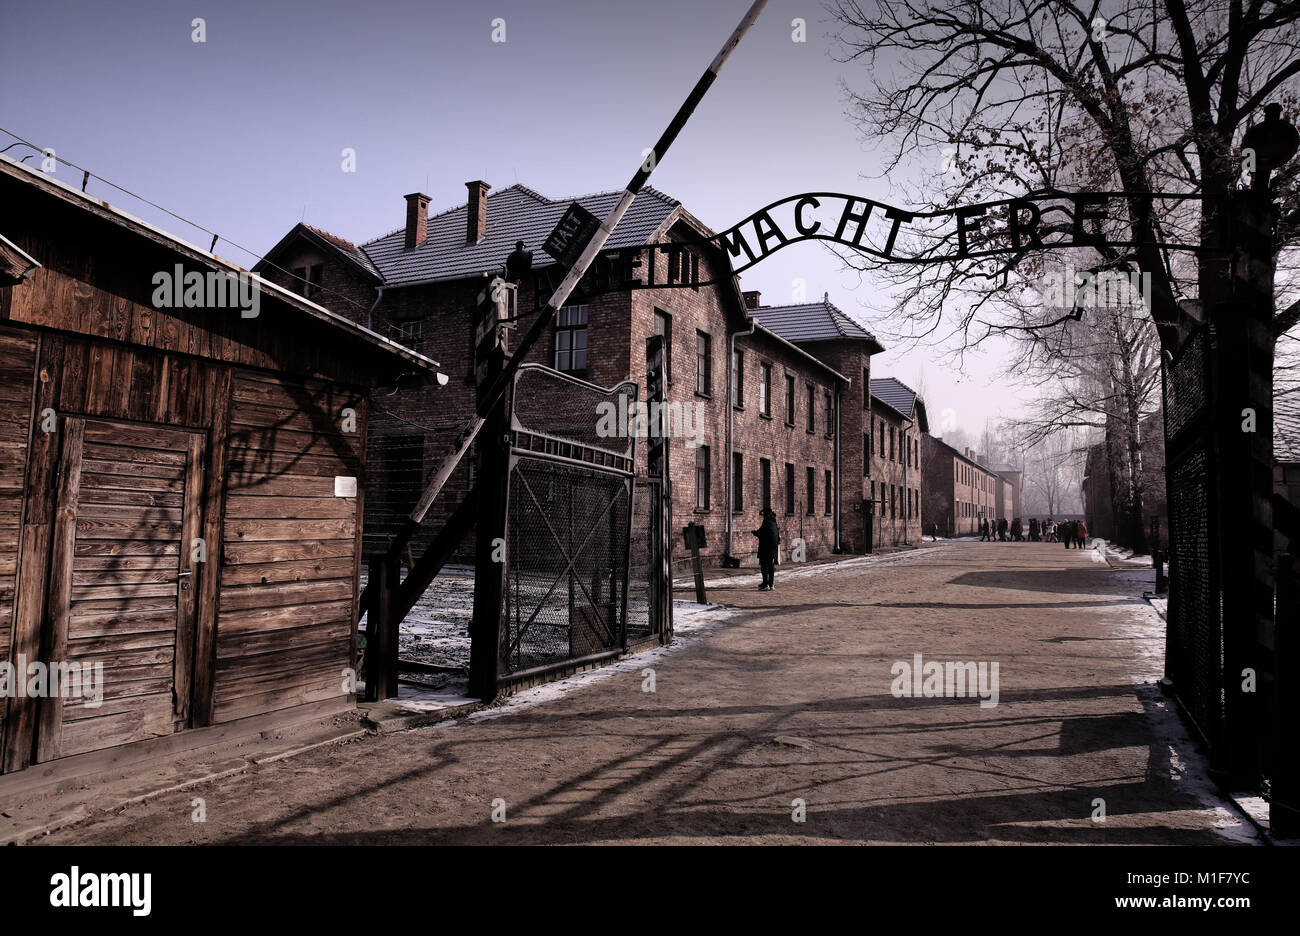 Entrance to Auschwitz I showing chilling iconic signage 'Arbeit Macht Frei' - Work Sets You Free Stock Photo